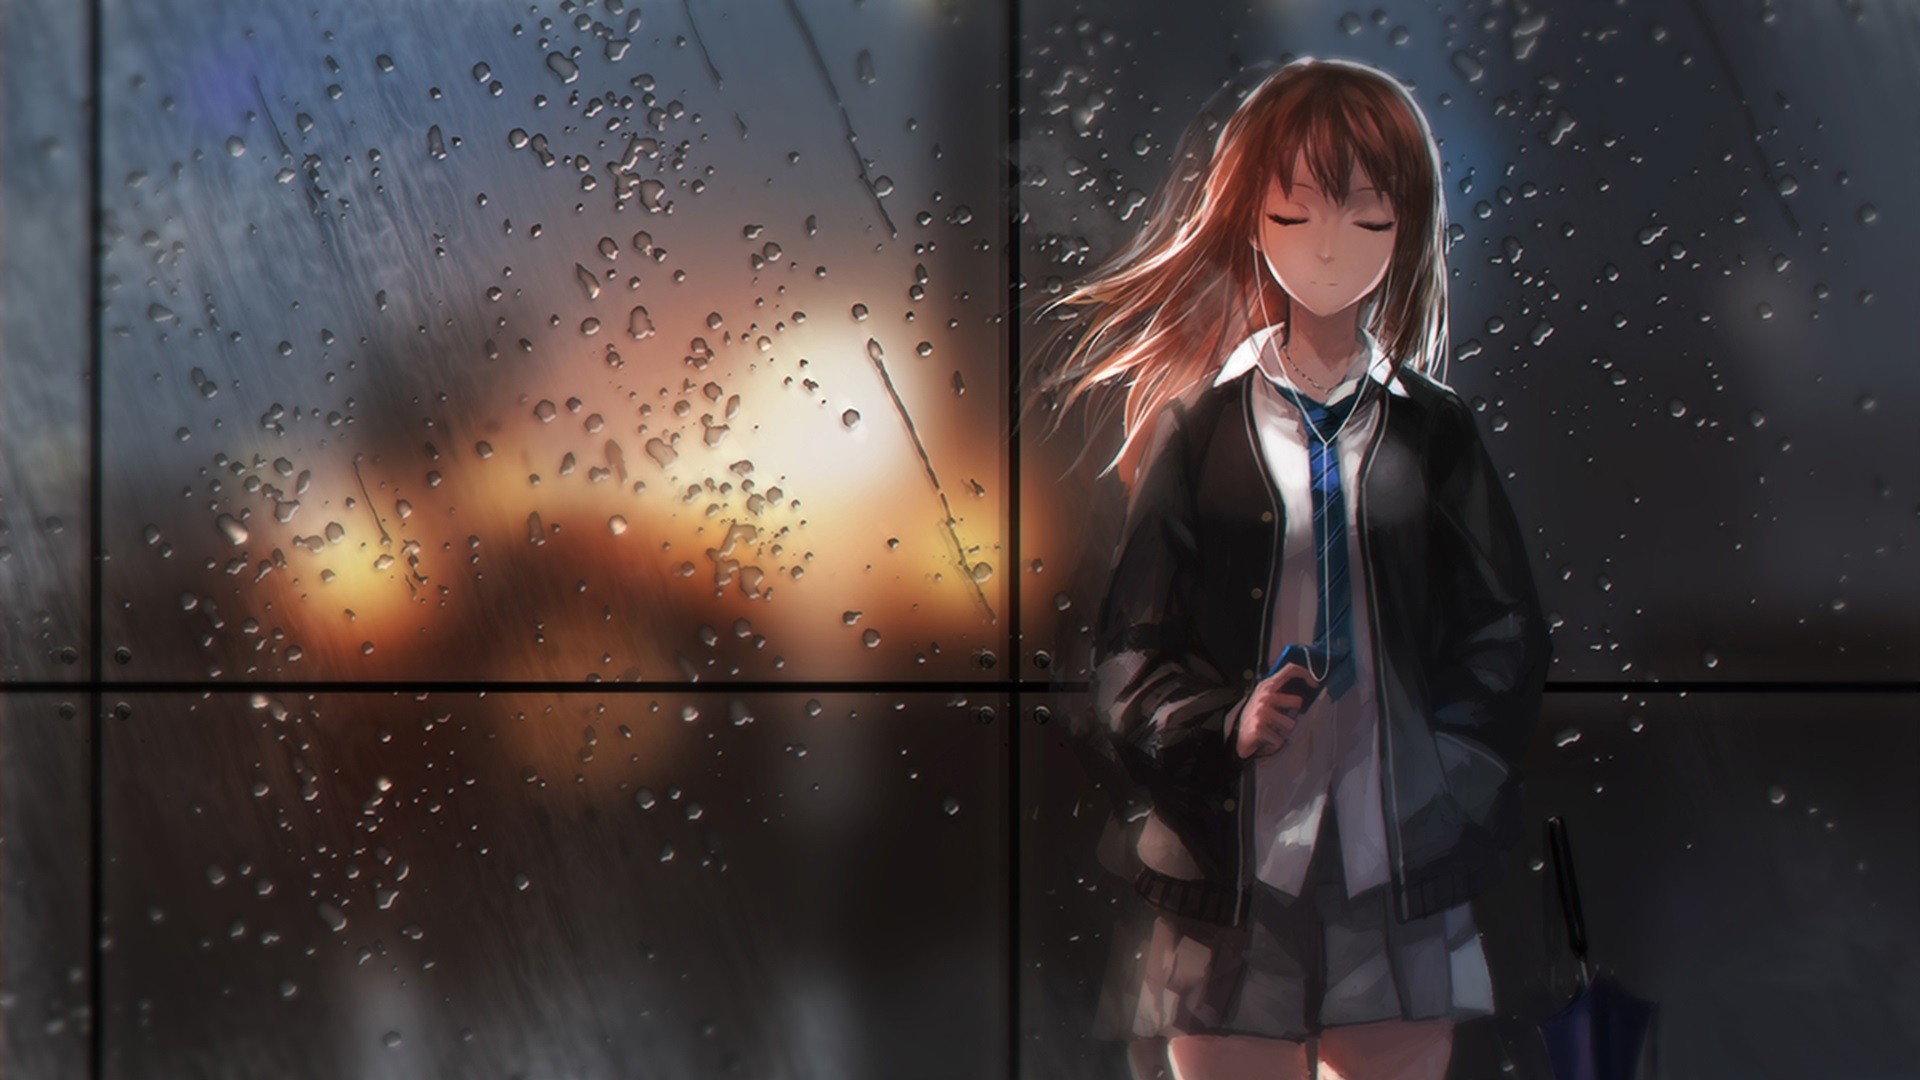 girl, anime, rain Wallpaper, HD Anime 4K Wallpapers, Images, Photos and